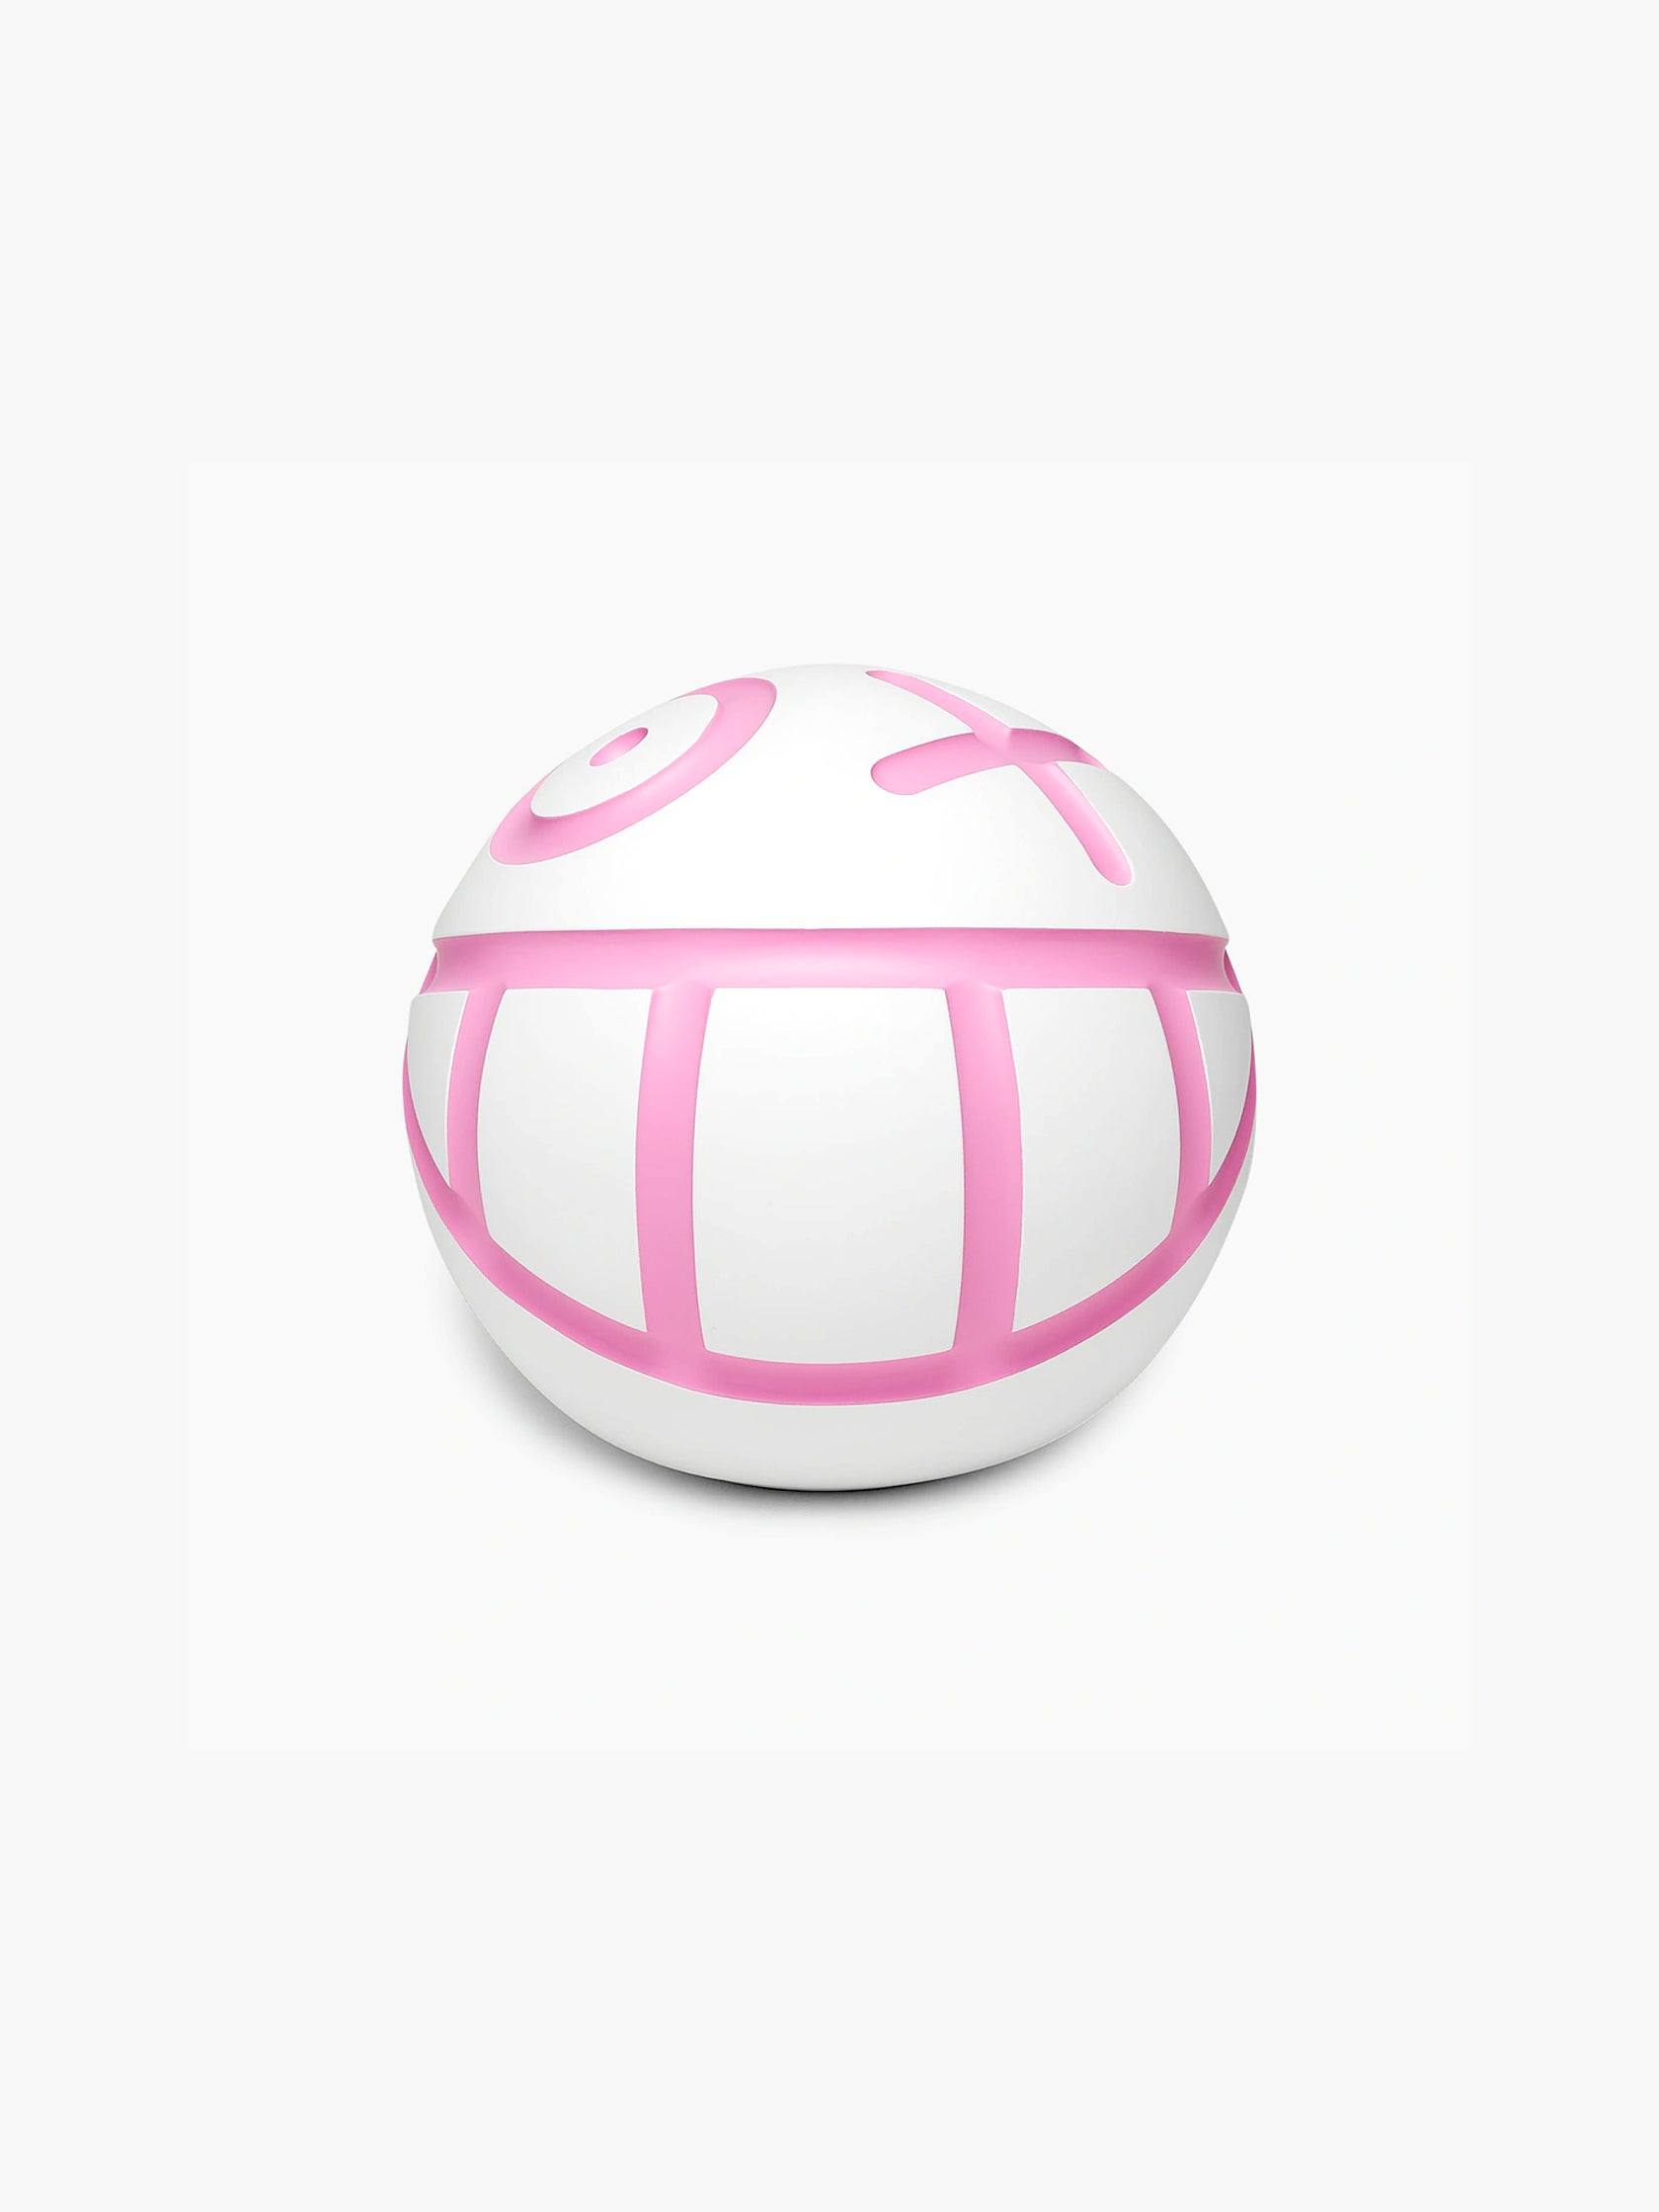 Andre Saraiva Mr. A Ball White Pink by Medicom Toy - Mankovsky Gallery